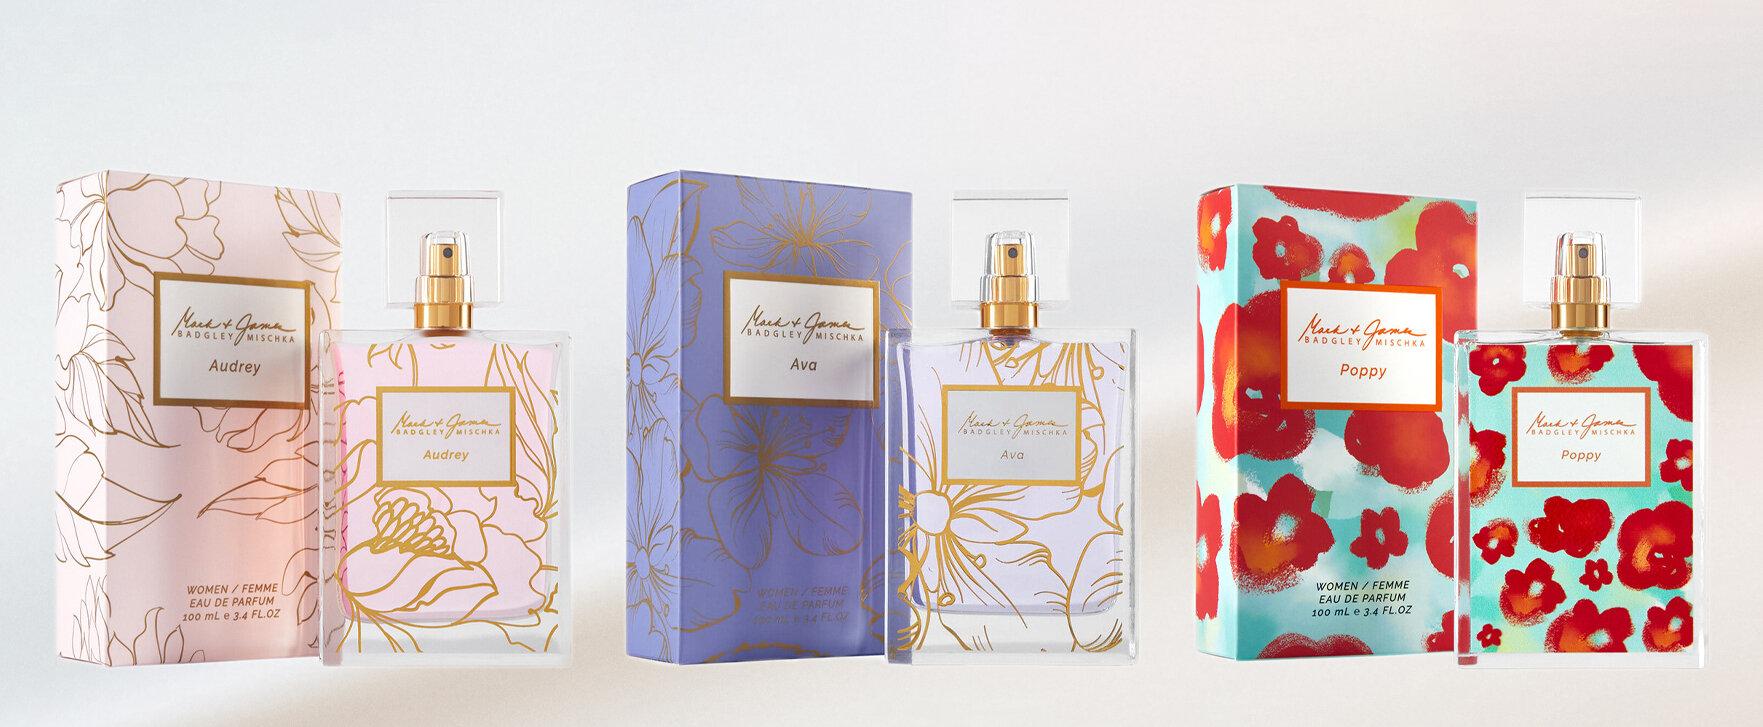 “Audrey, Ava and Poppy” - New Feminine Trio Fragrance Collection by Badgley Mischka